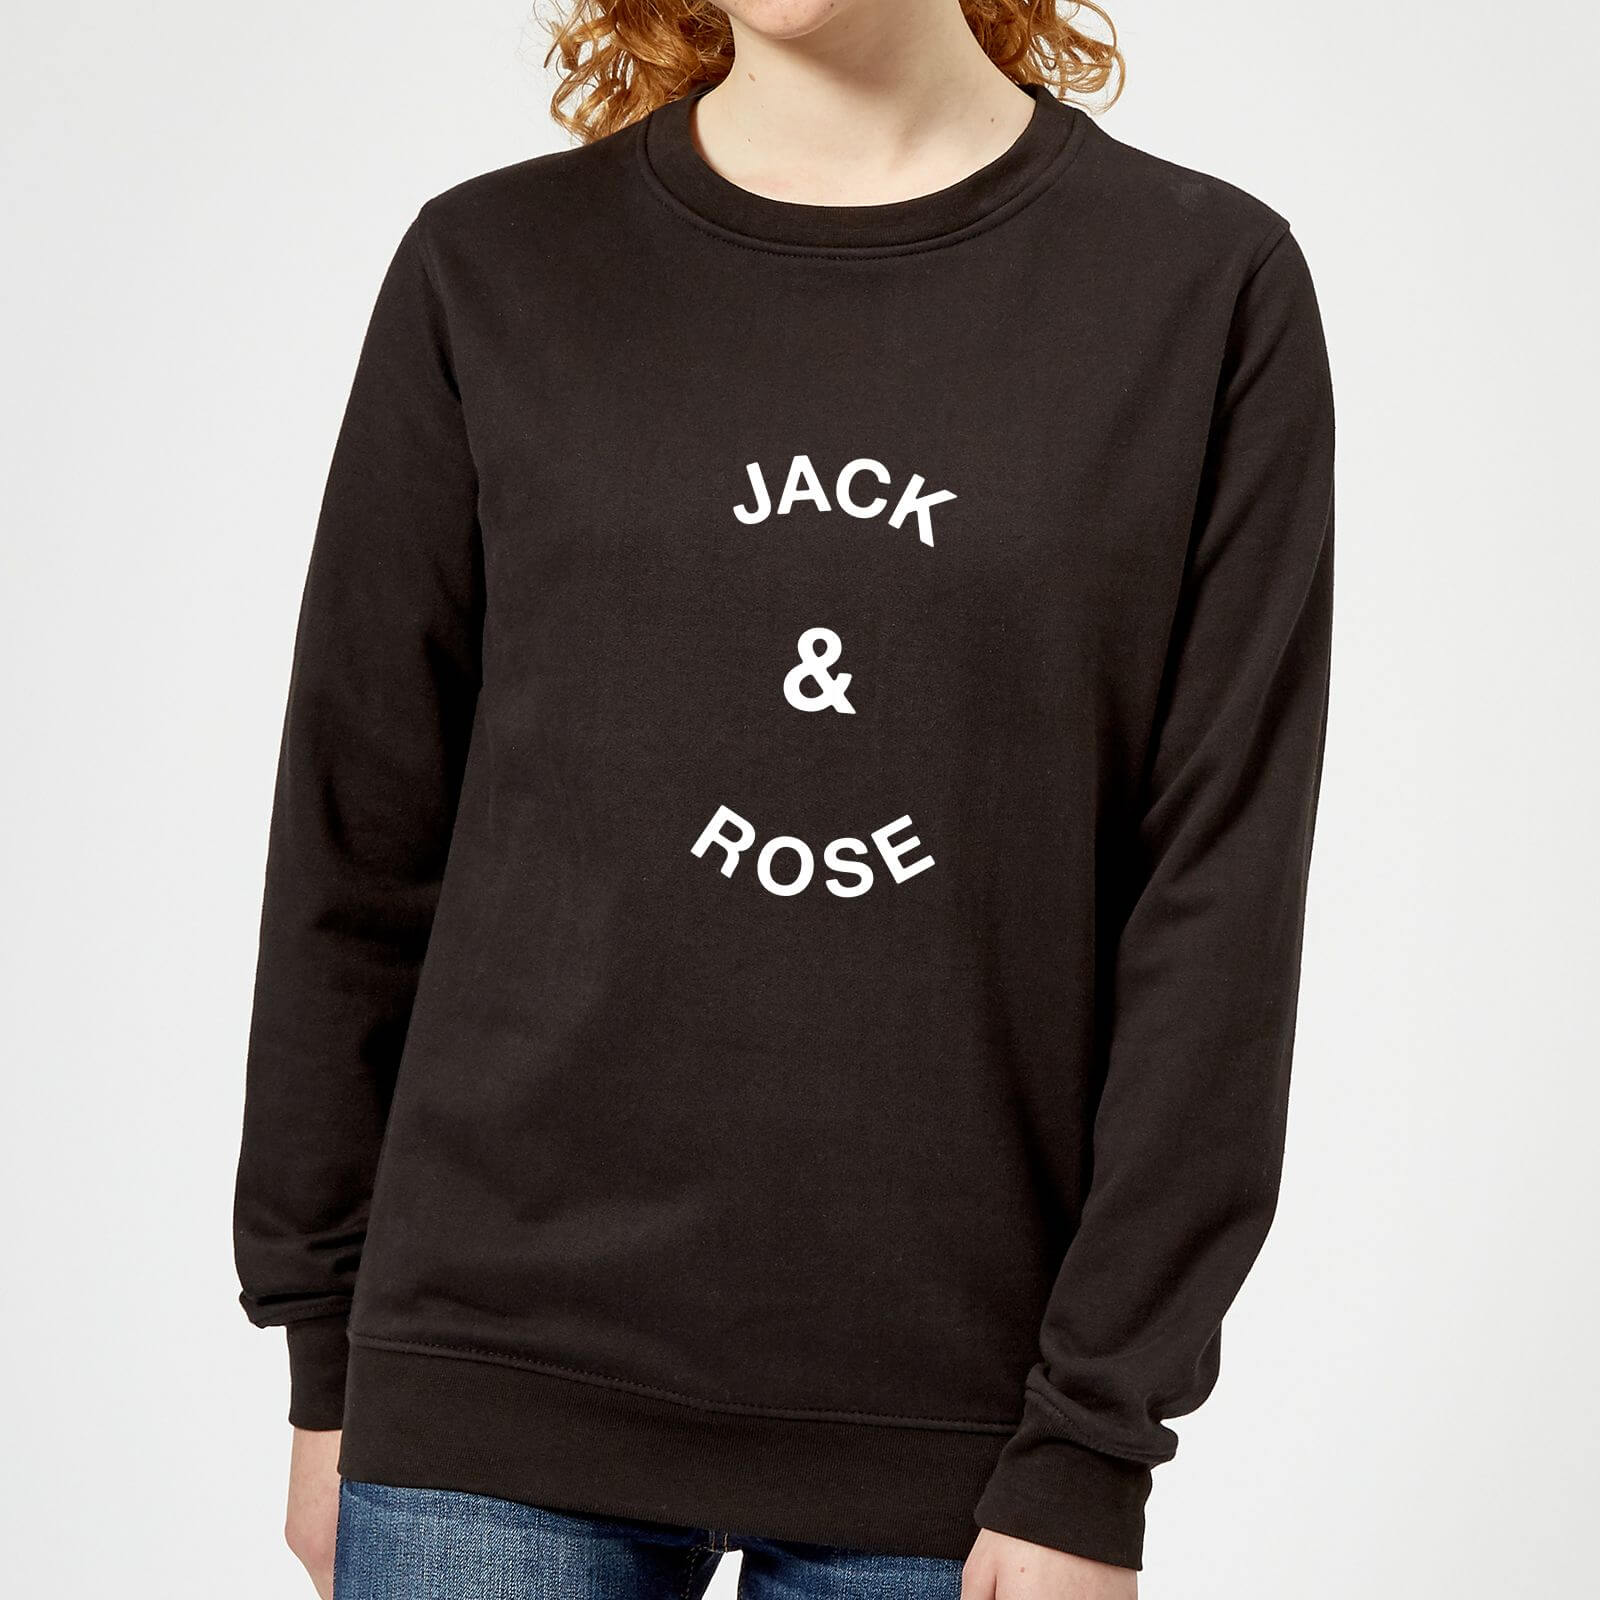 Jack & Rose Women's Sweatshirt - Black - XL - Black